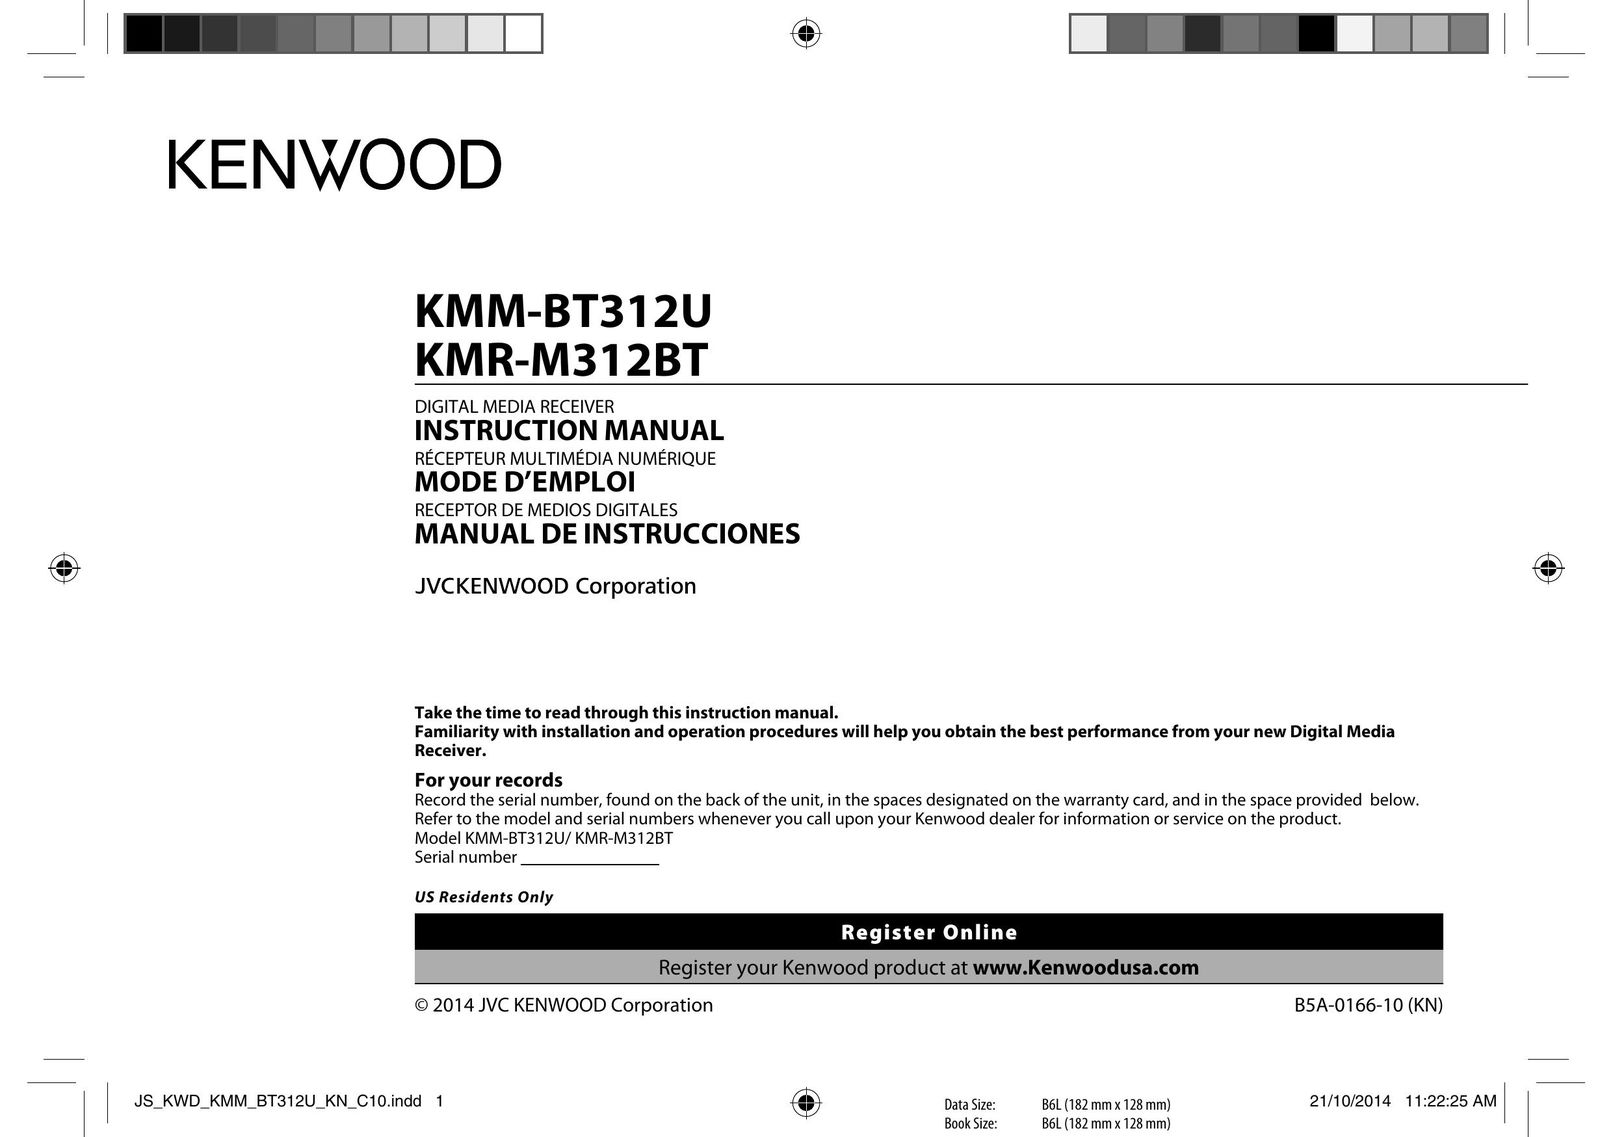 Kenwood KMR-M312BT Car Satellite TV System User Manual